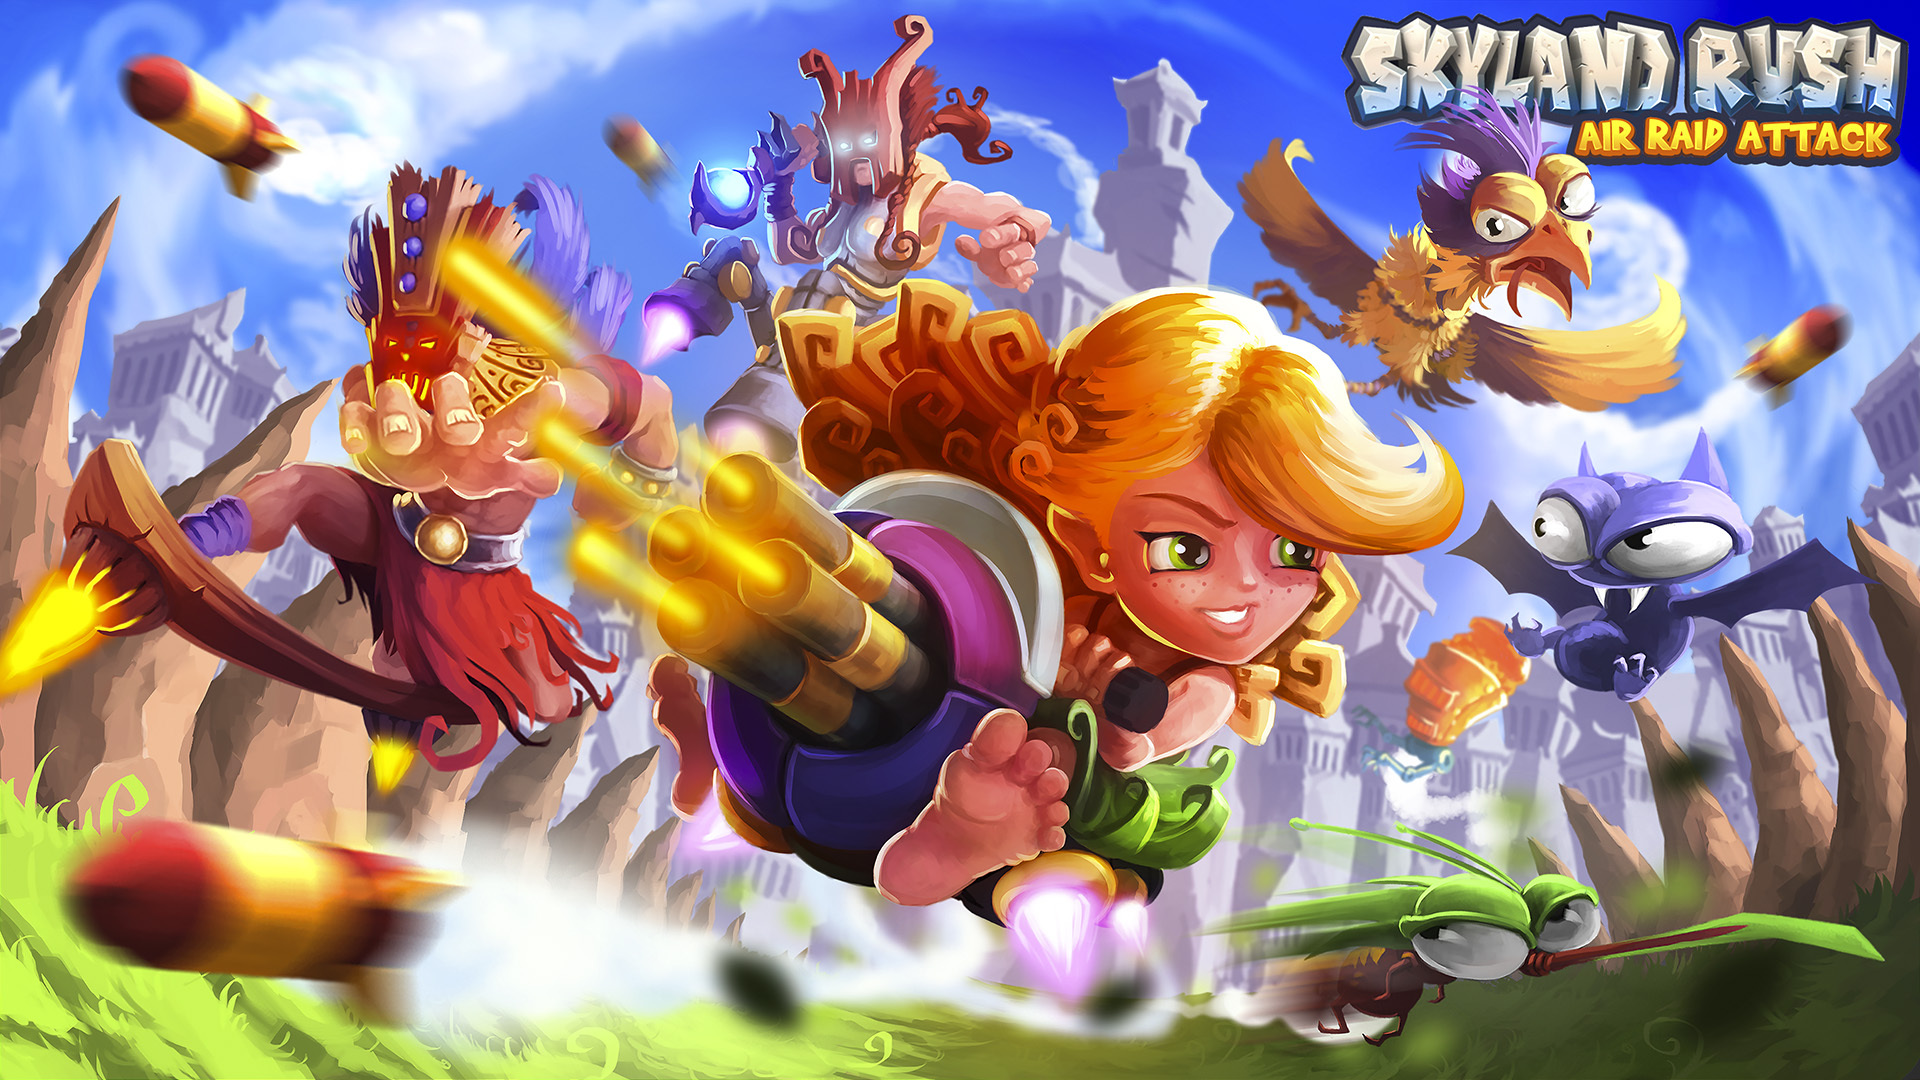 Skyland Rush - Air Raid Attack